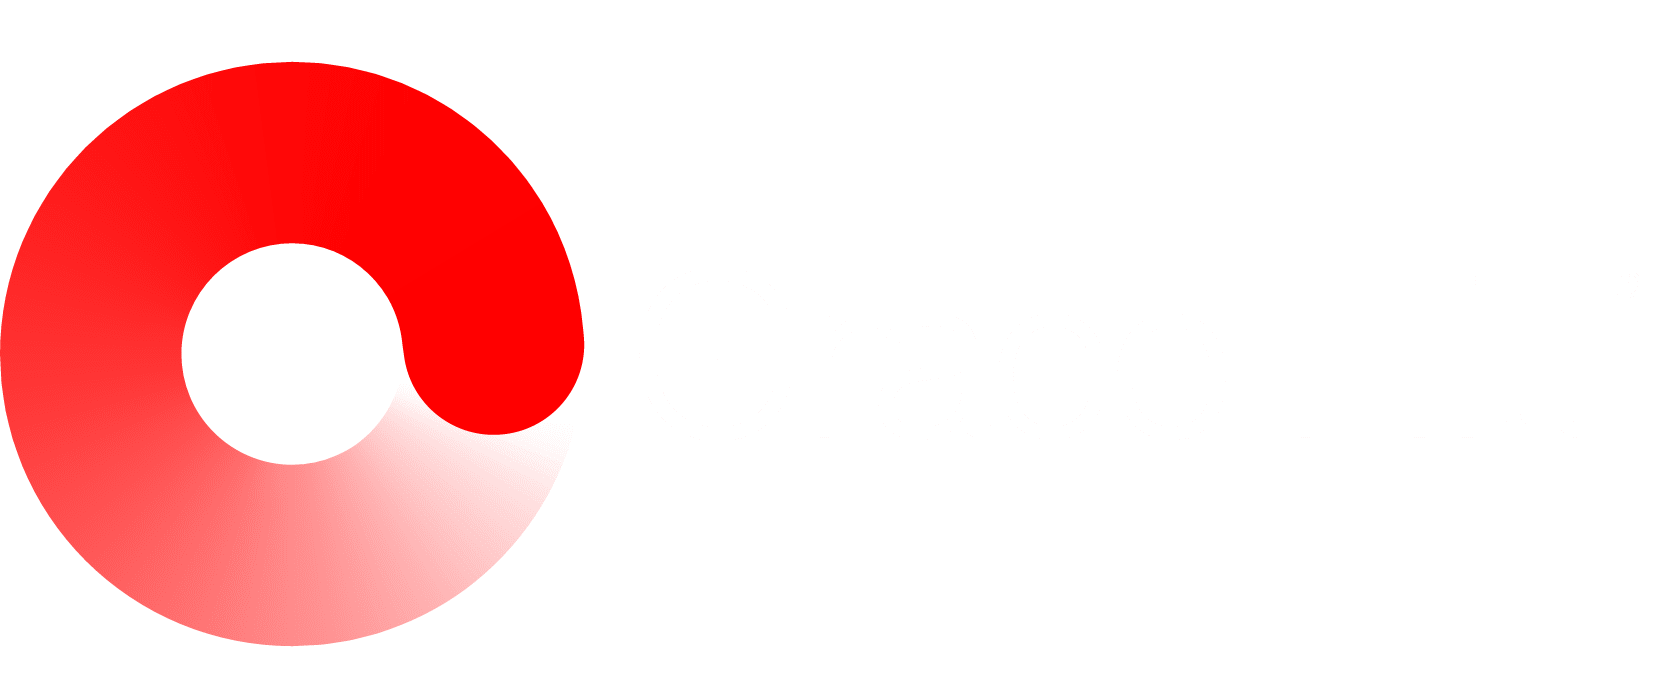 The Grace Hill logo